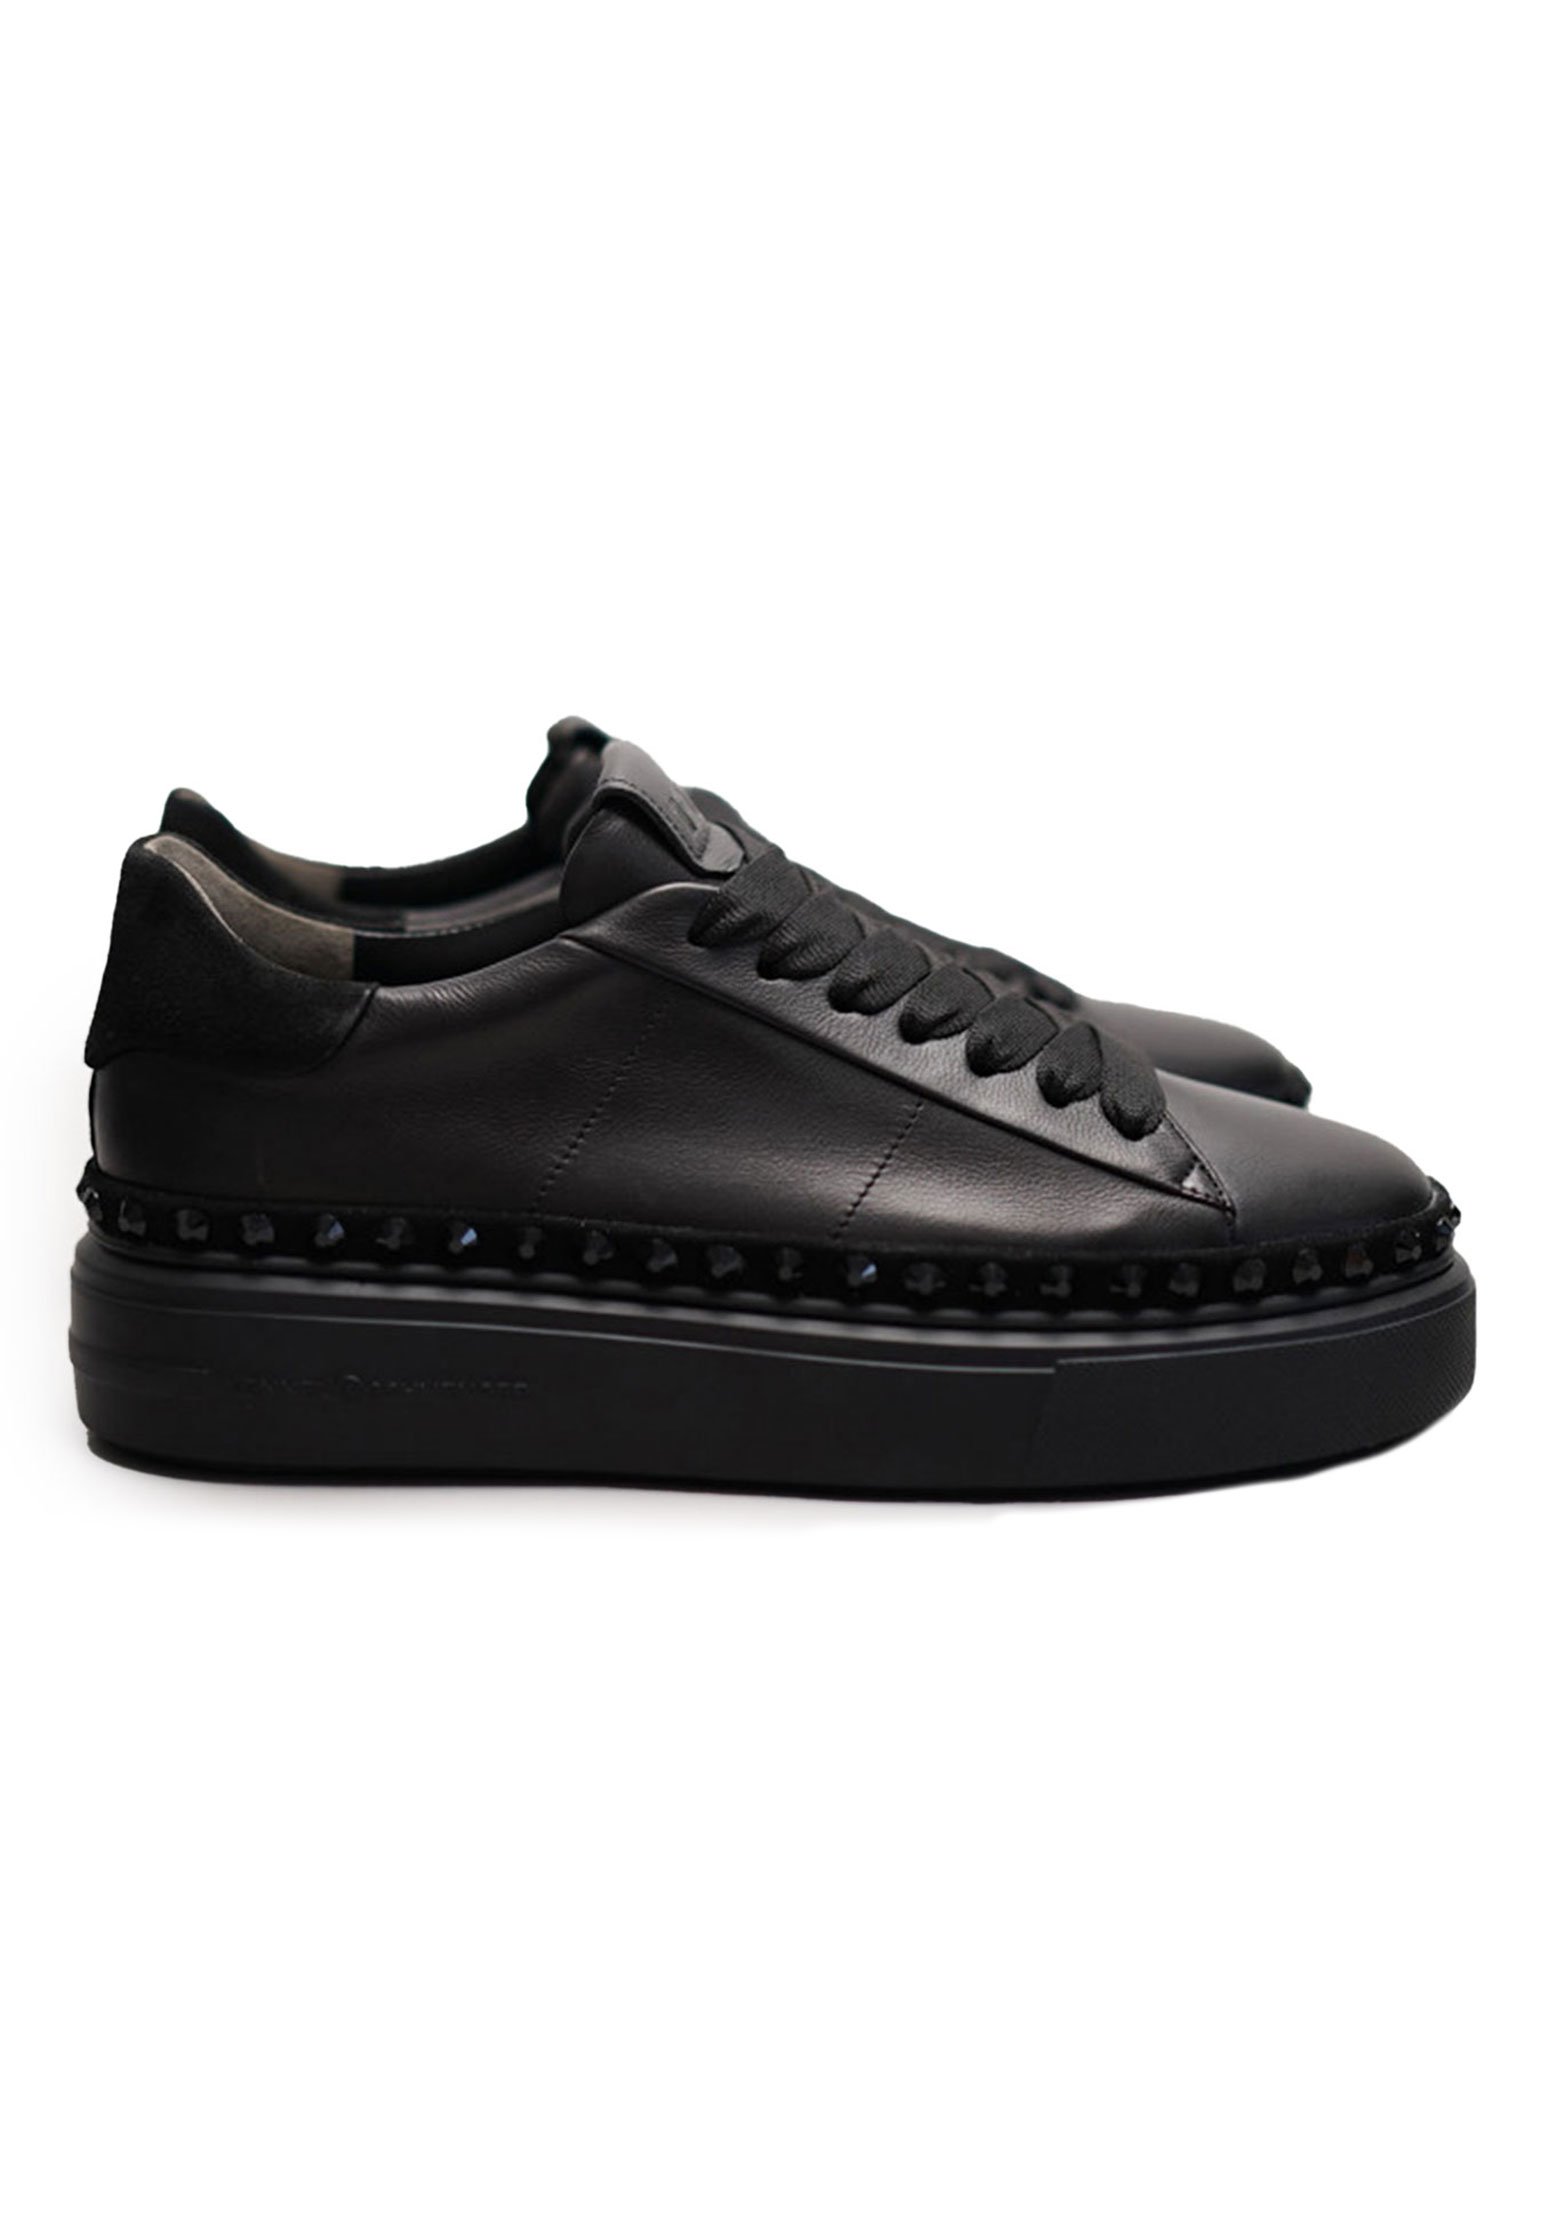 Flat shoes KENNEL&SCHMENGER Color: black (Code: 4166) in online store Allure